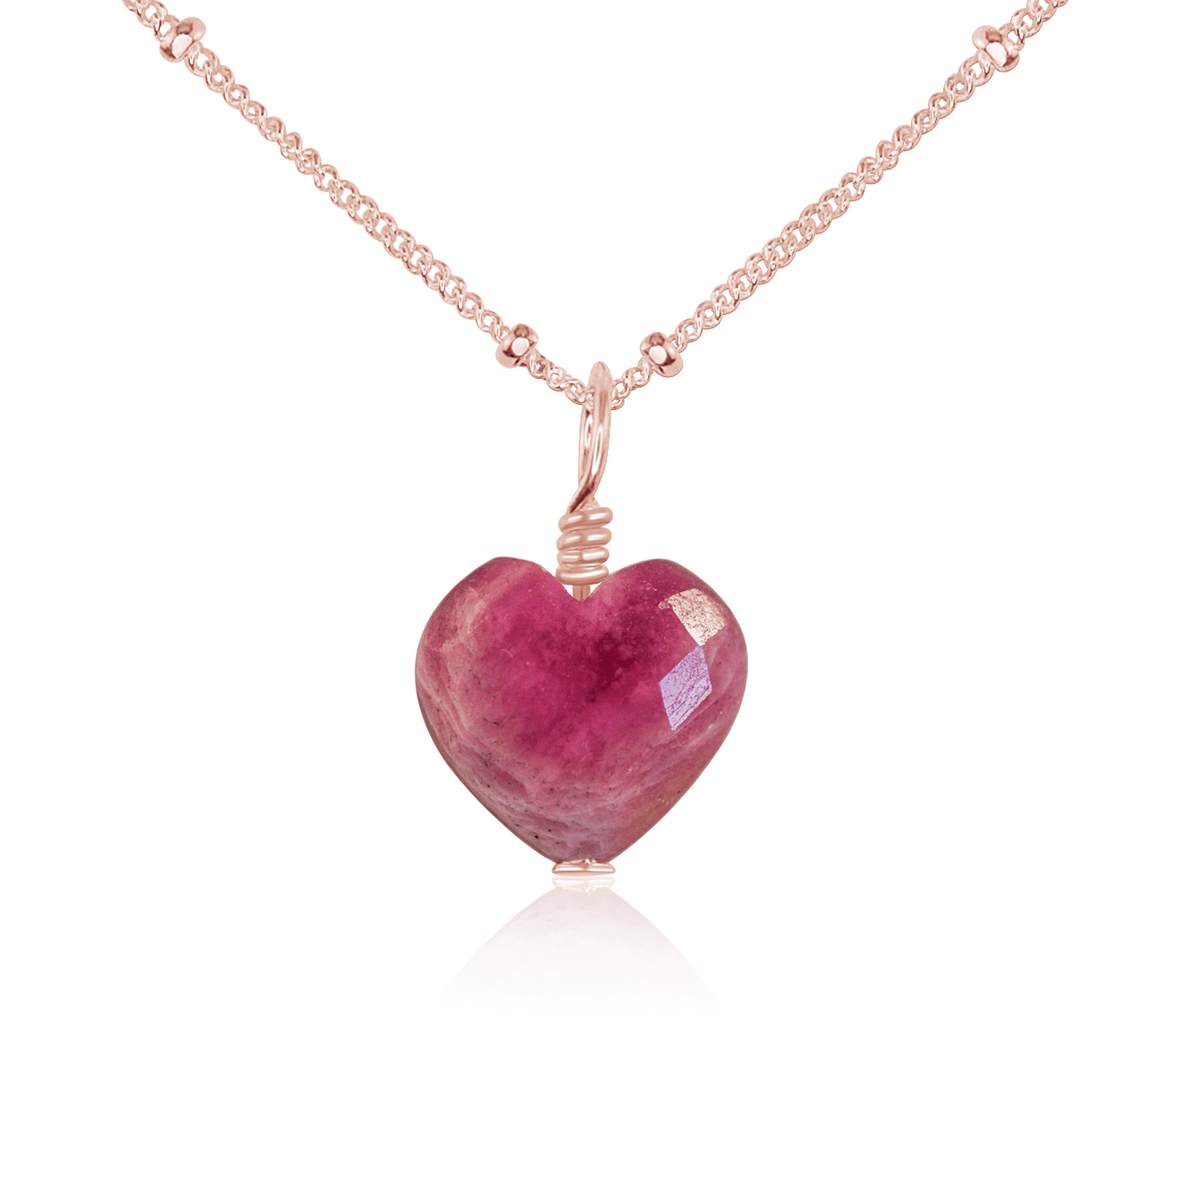 Ruby Crystal Heart Pendant Necklace - Ruby Crystal Heart Pendant Necklace - 14k Rose Gold Fill / Satellite - Luna Tide Handmade Crystal Jewellery